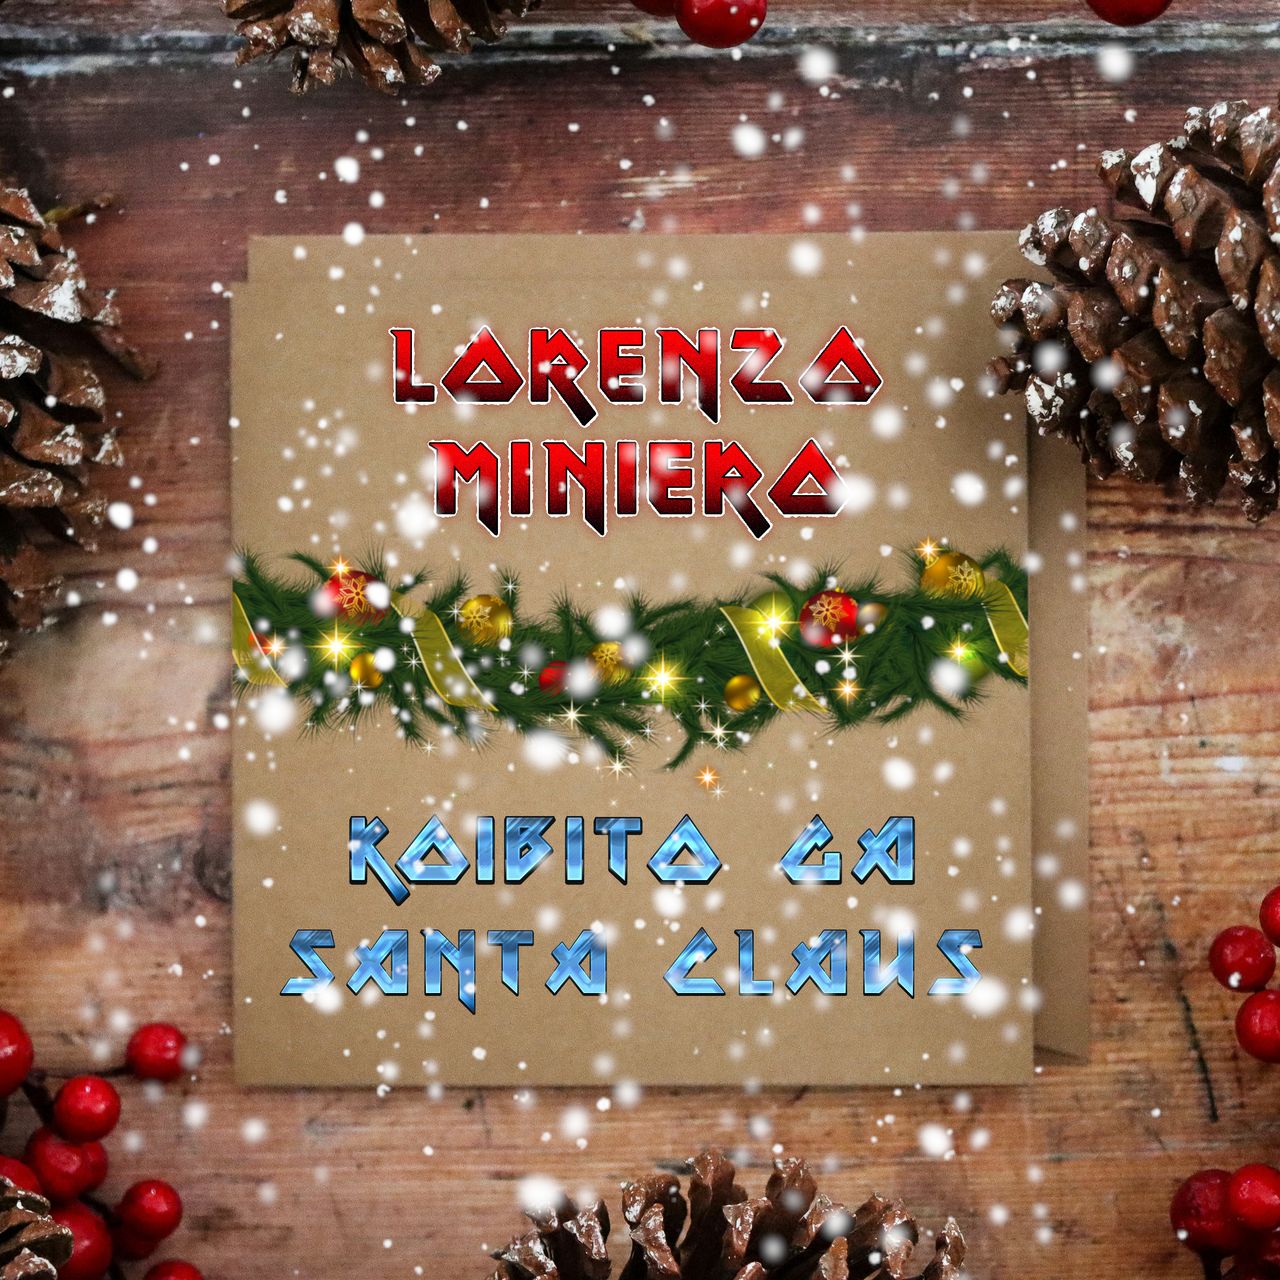 Cover of the "Koibito Ga Santa Claus" single